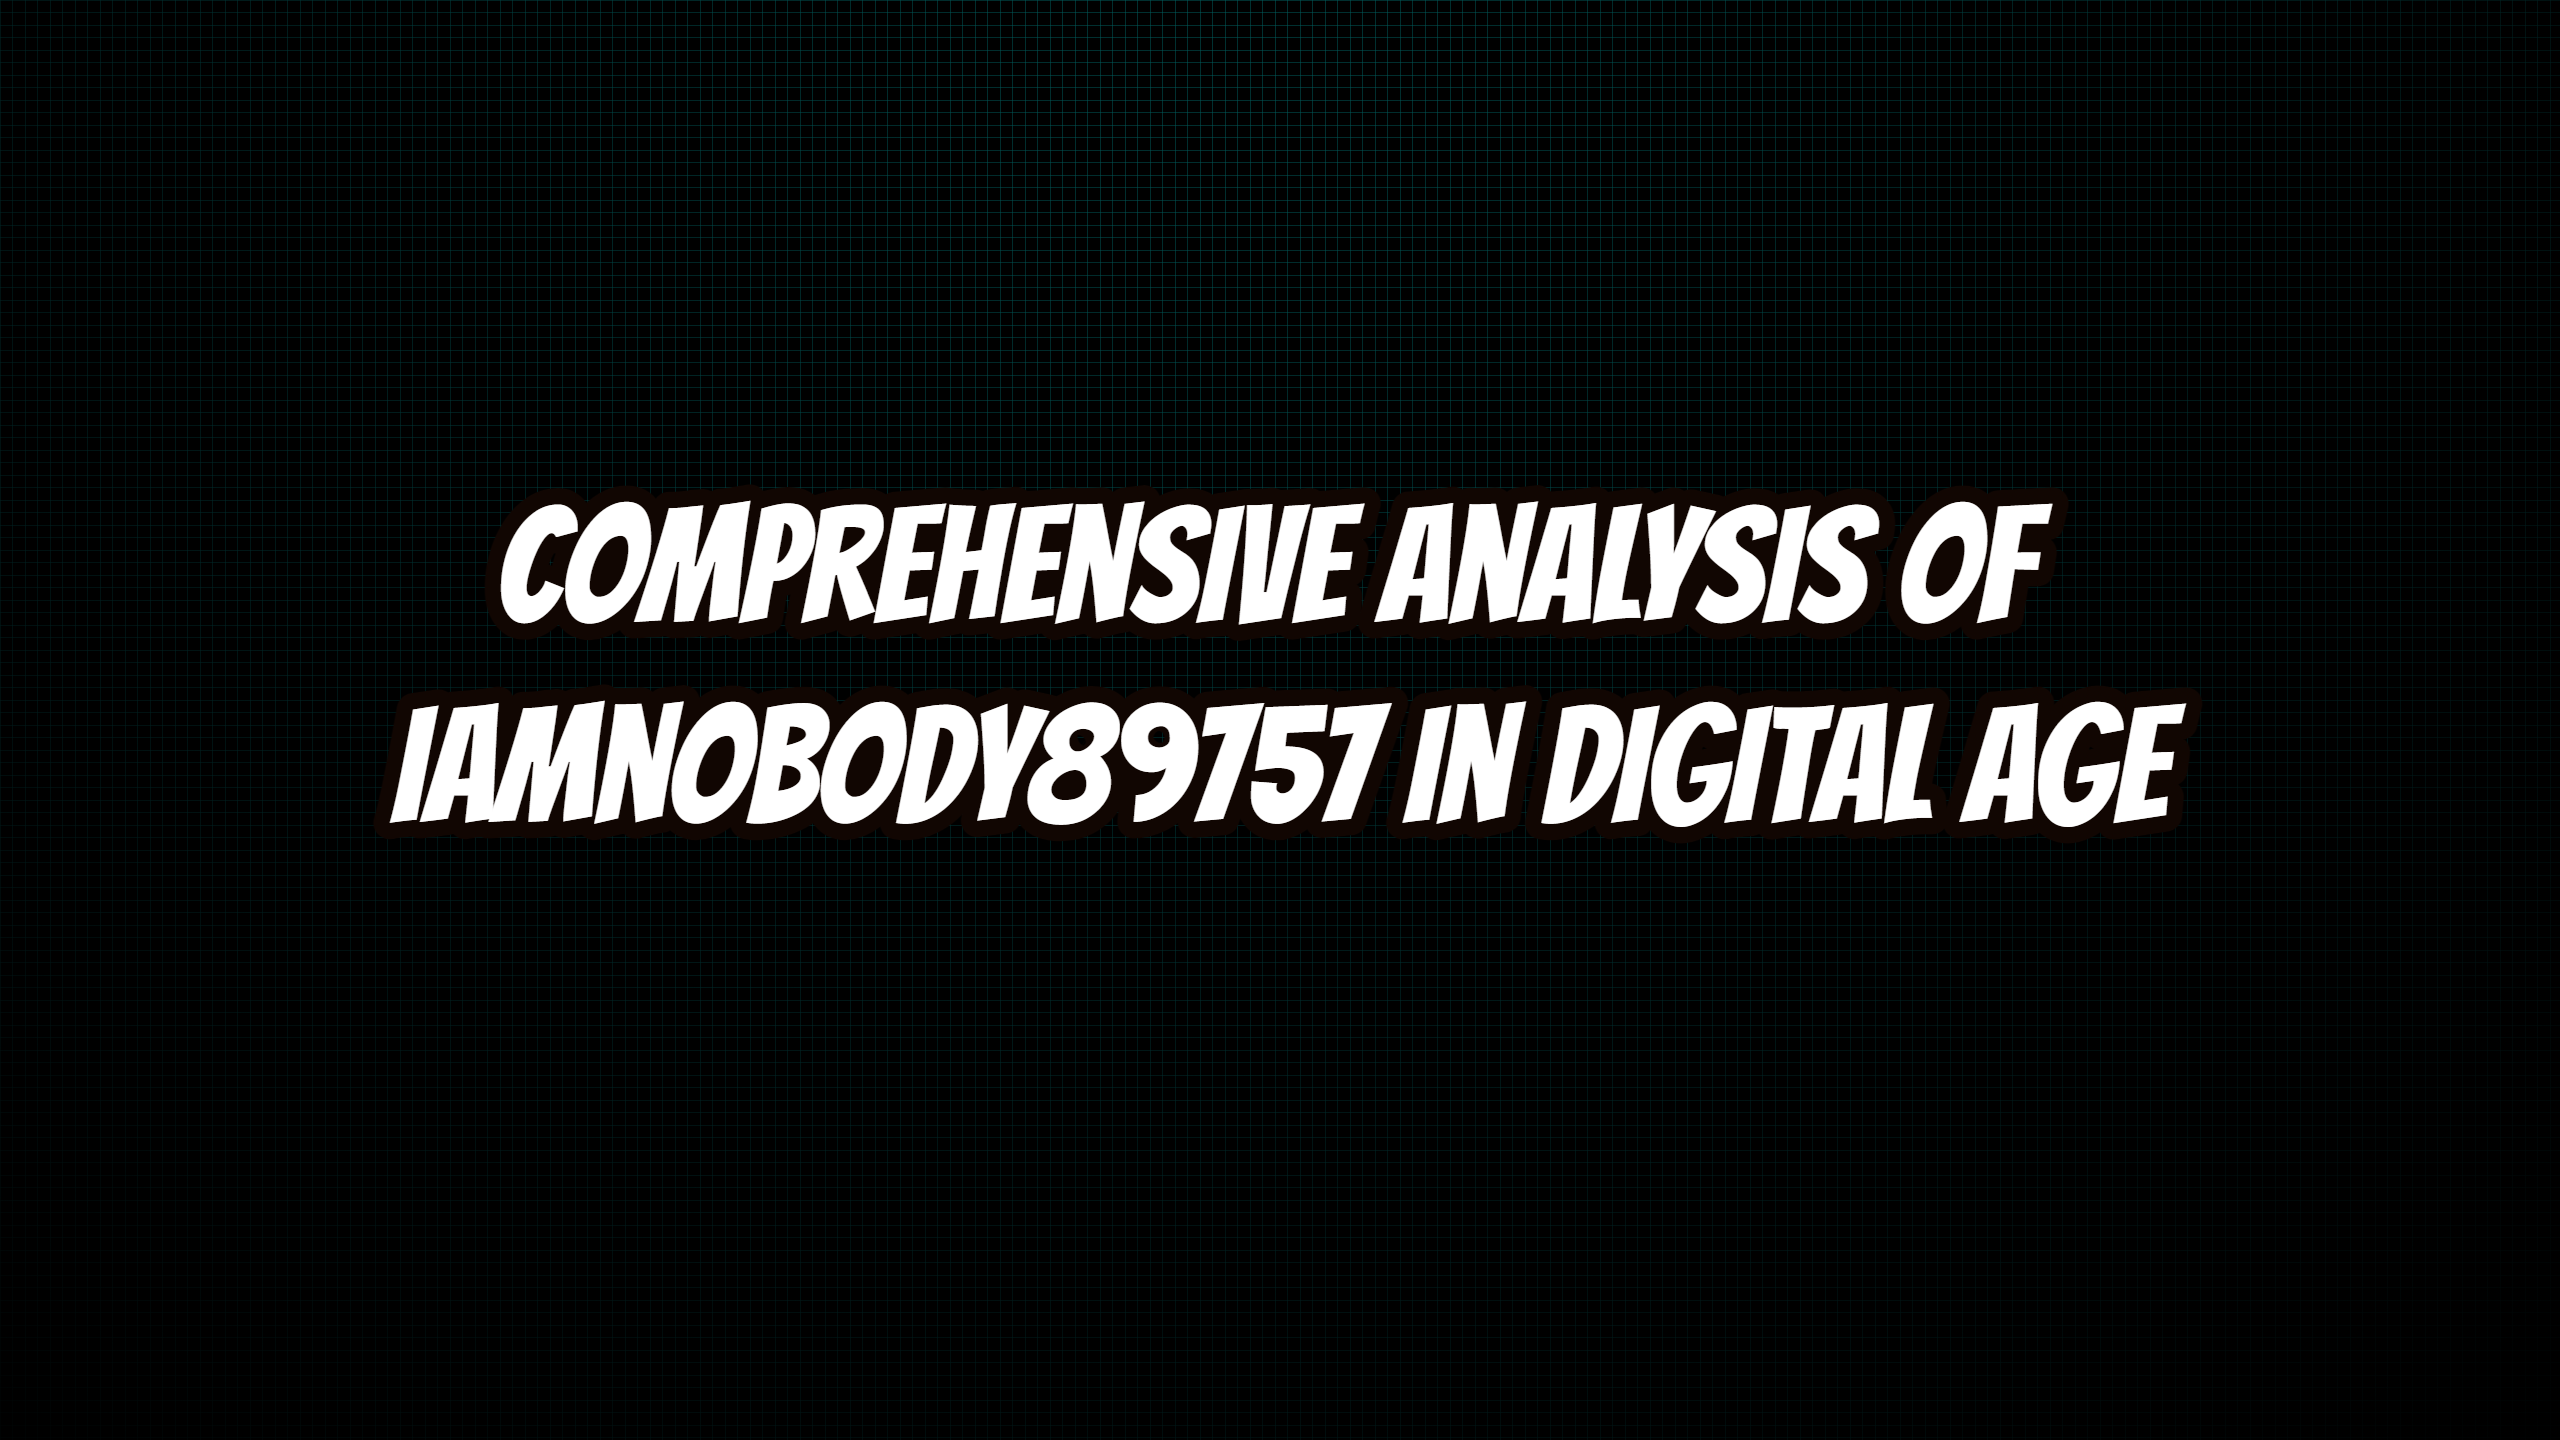 Comprehensive analysis of iamnobody89757 in Digital Age